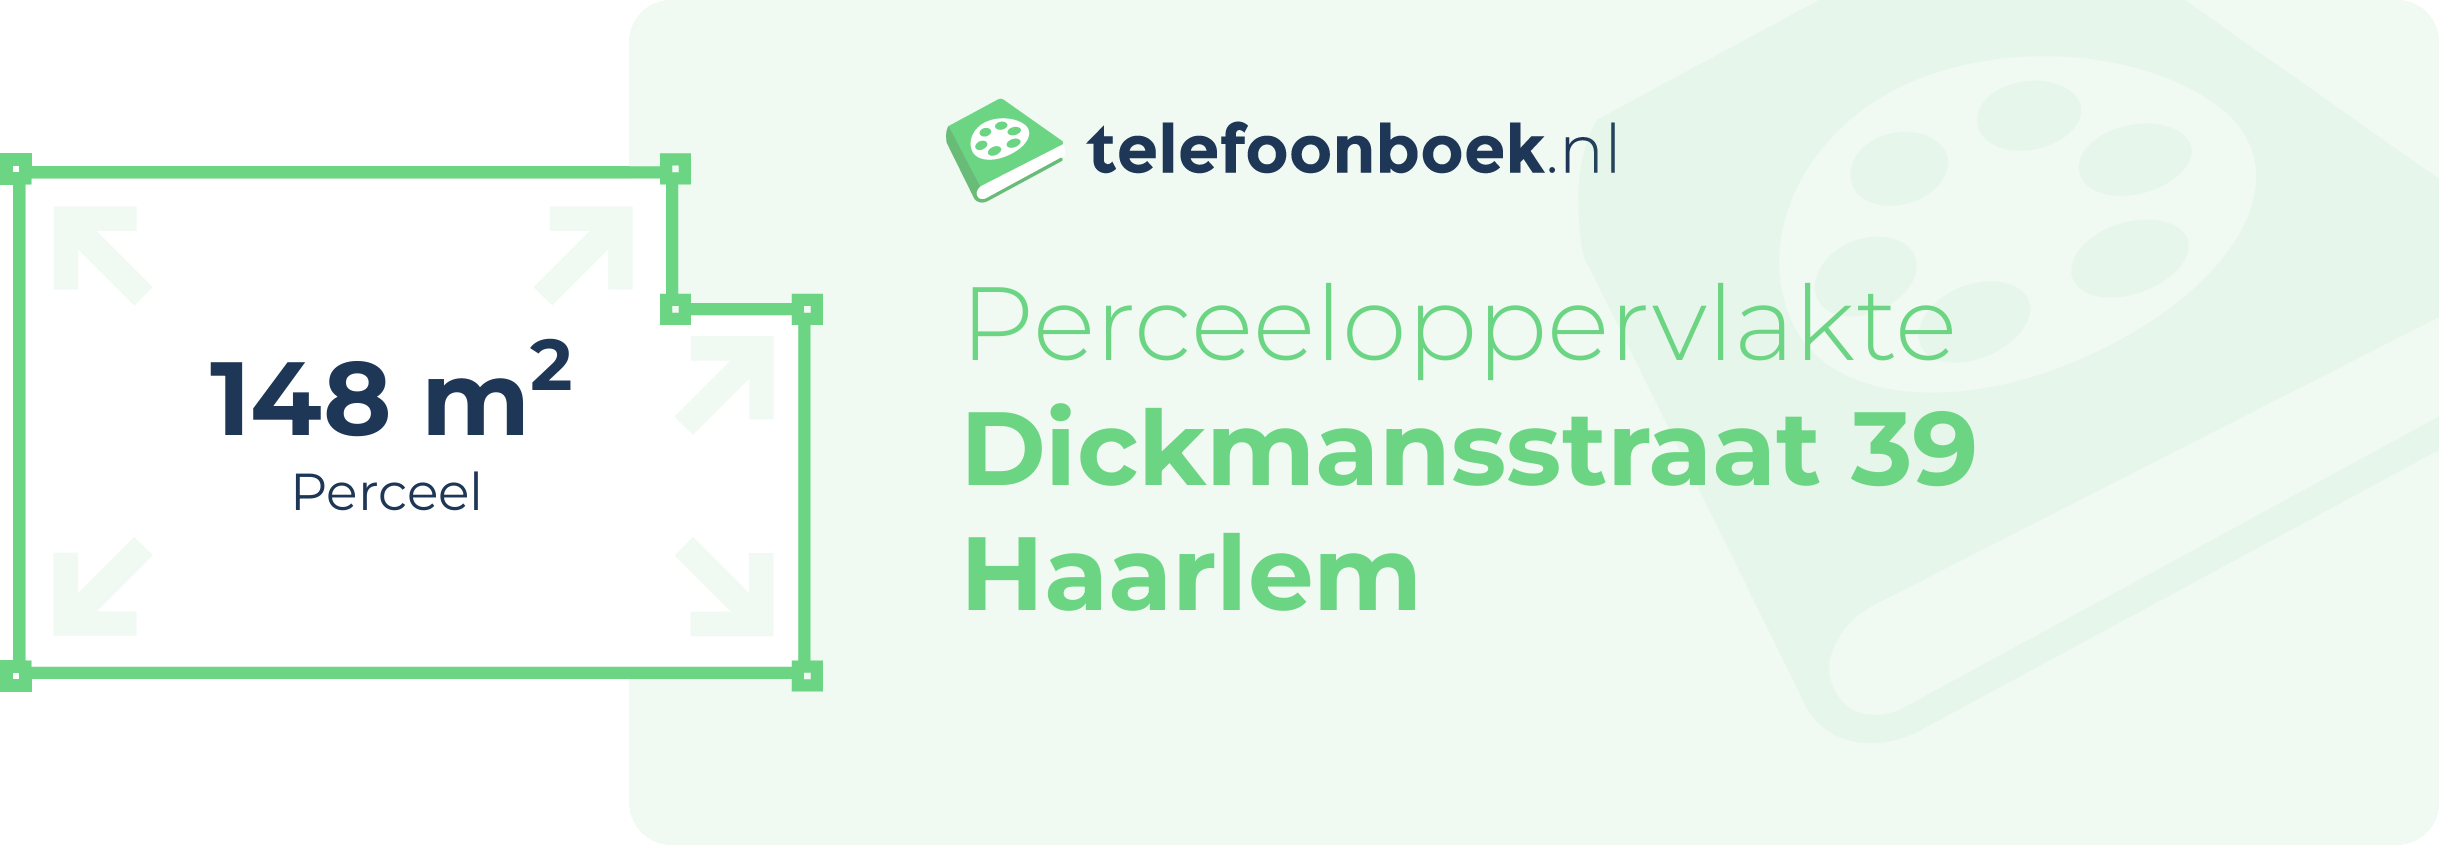 Perceeloppervlakte Dickmansstraat 39 Haarlem